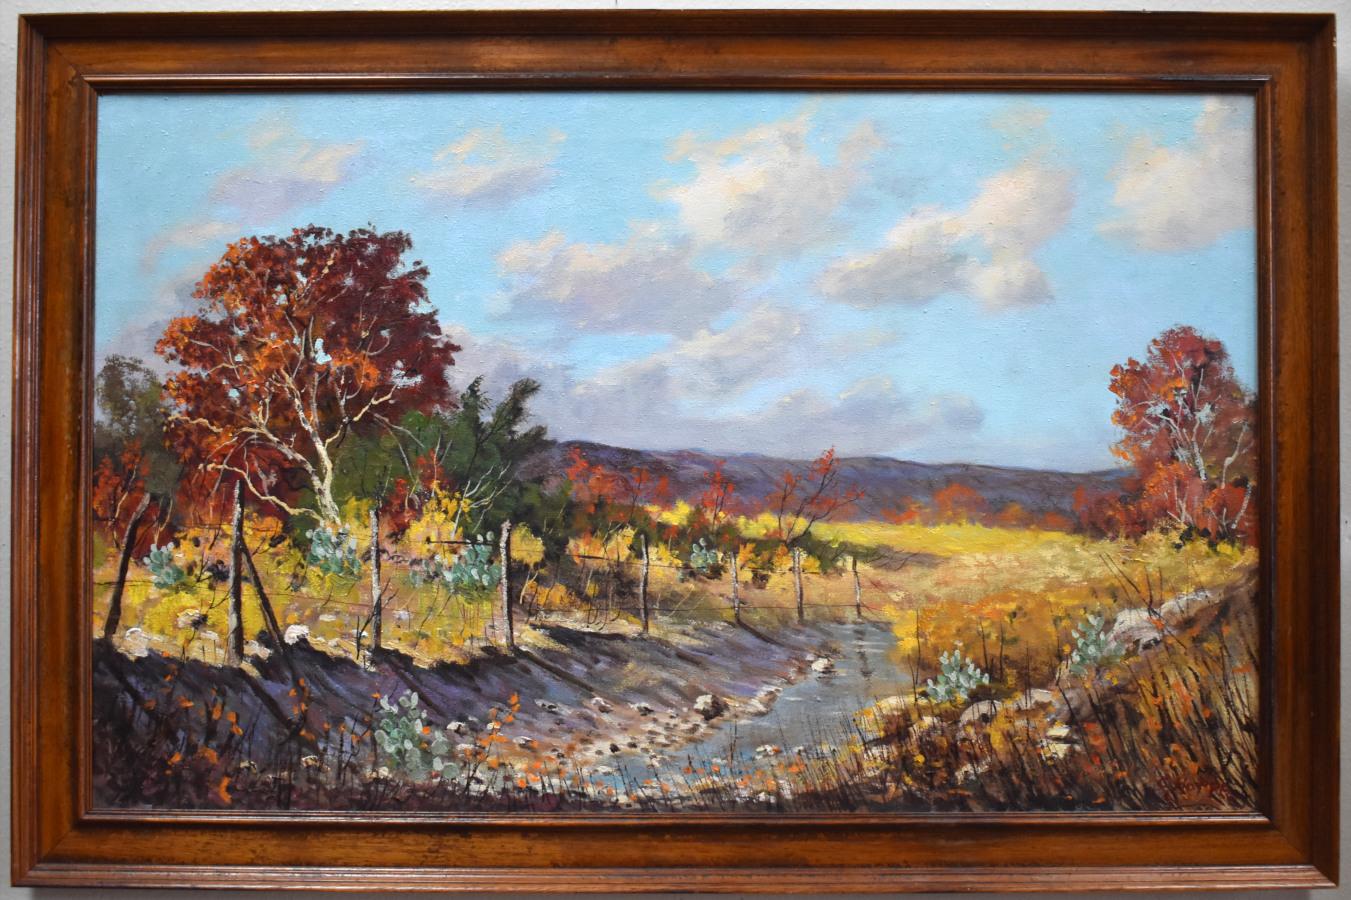 Carl Hoppe  Landscape Painting - "CREEK IN LEON VALLEY" SAN ANTONIO TEXAS FRAMED 26.25 X 40.25